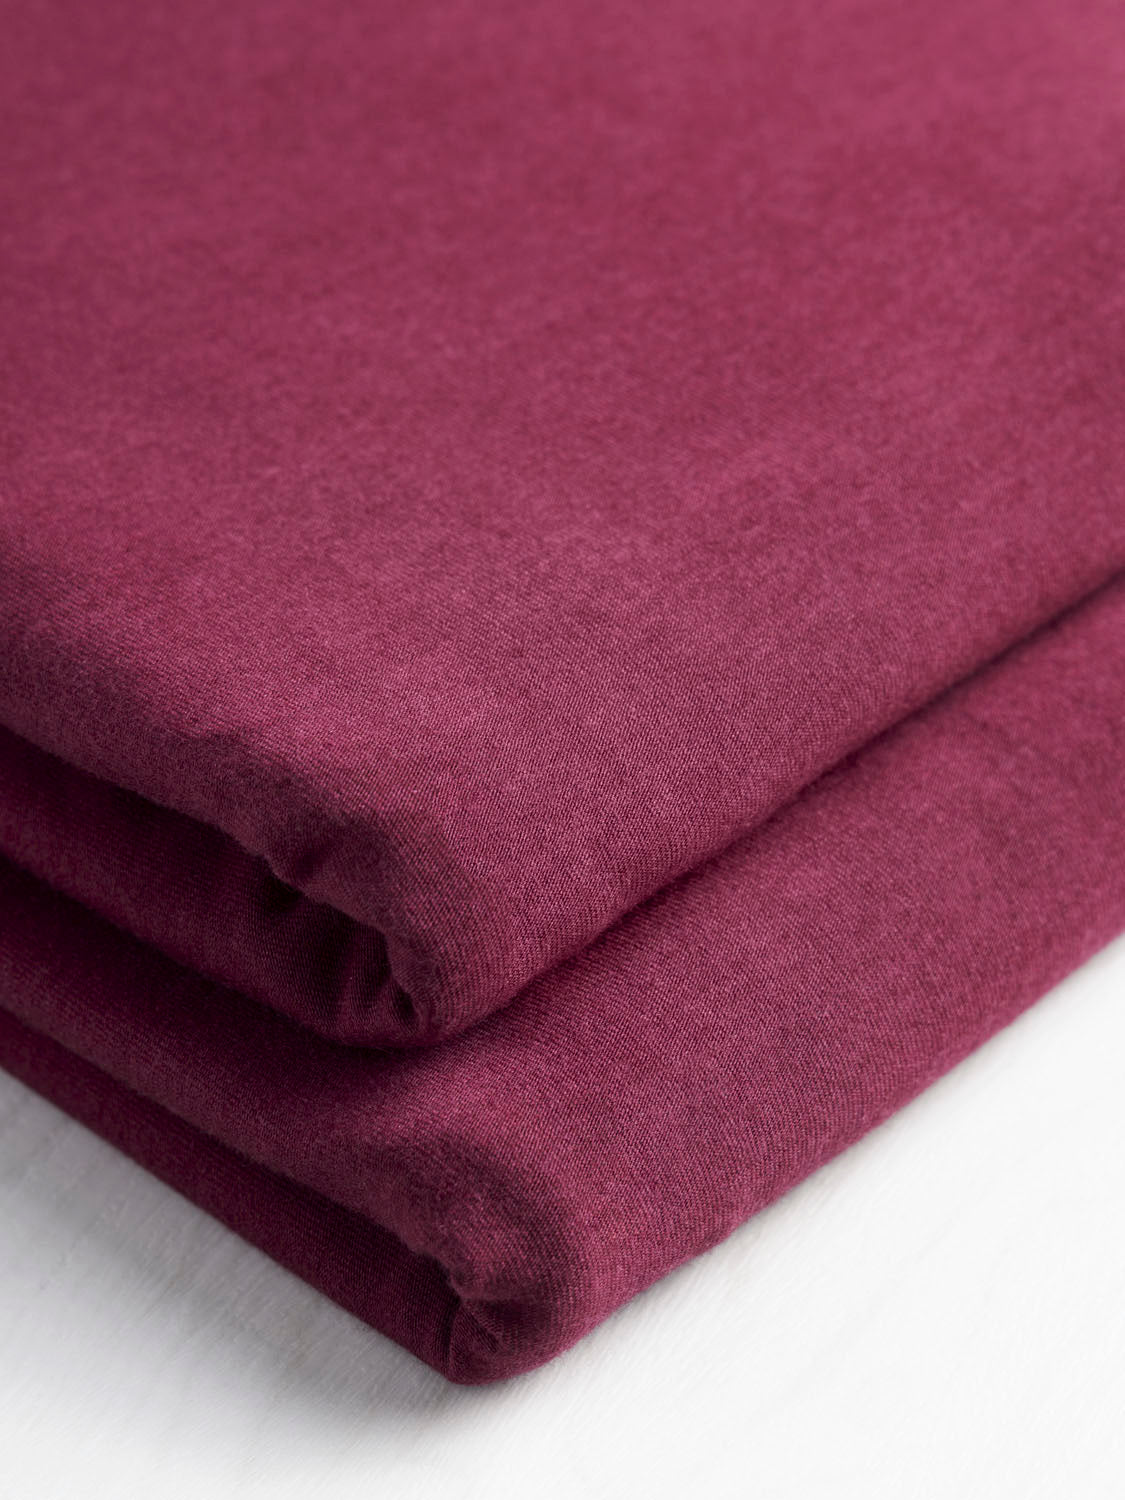 Cali Fabrics Light Tan Cotton/Modal Stretch Lightweight Rib Knit